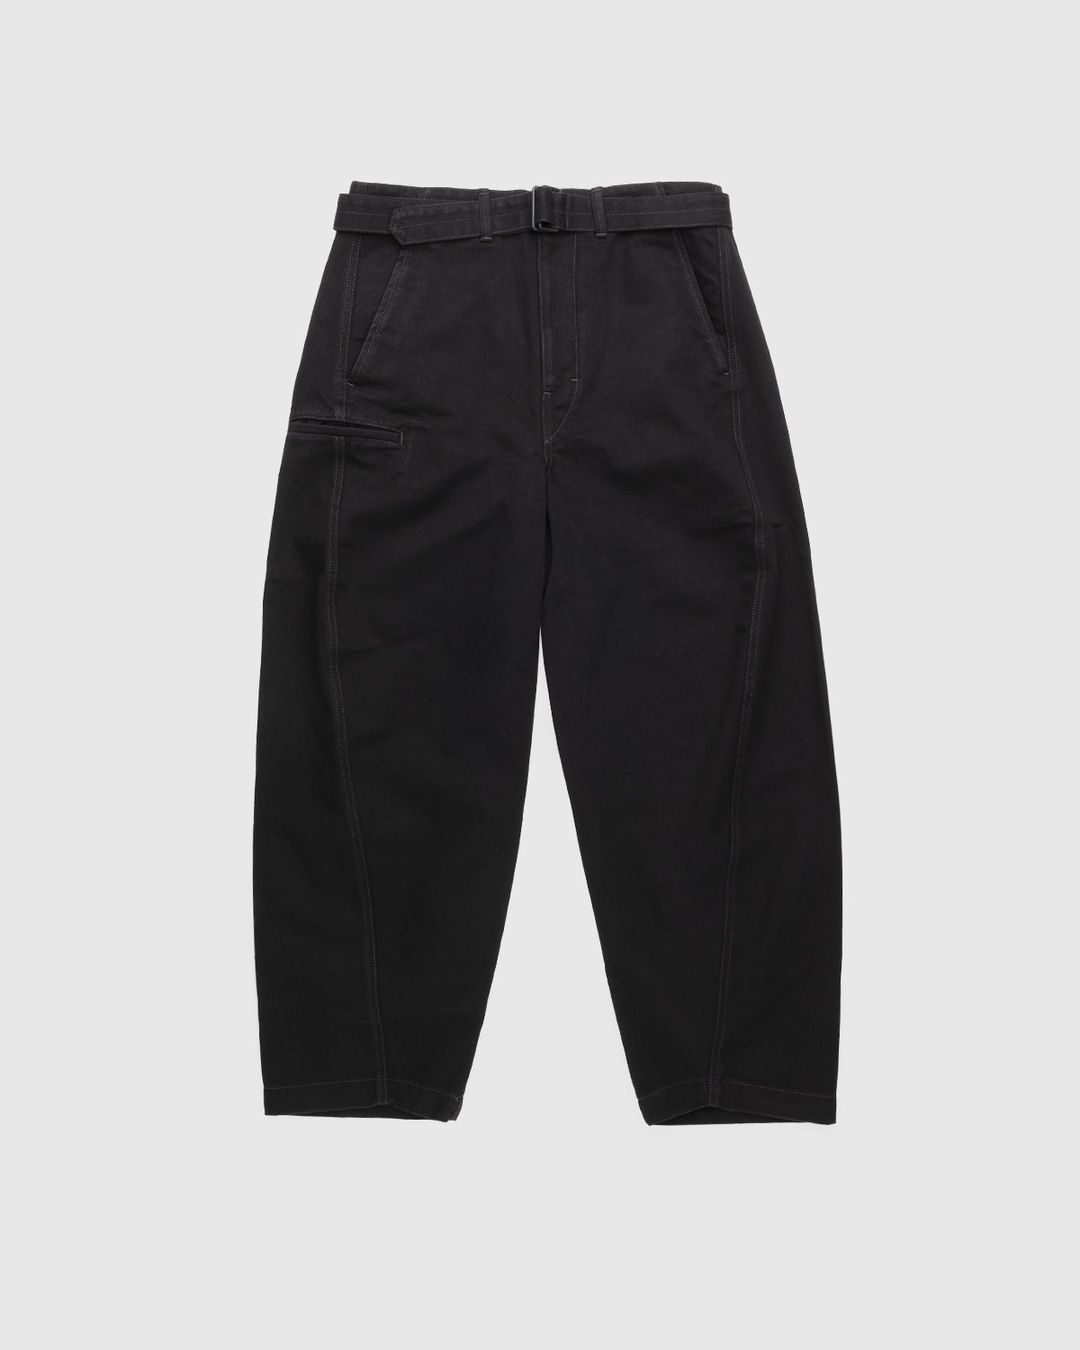 Lemaire – Rinsed Denim Twisted Pants Black | Highsnobiety Shop